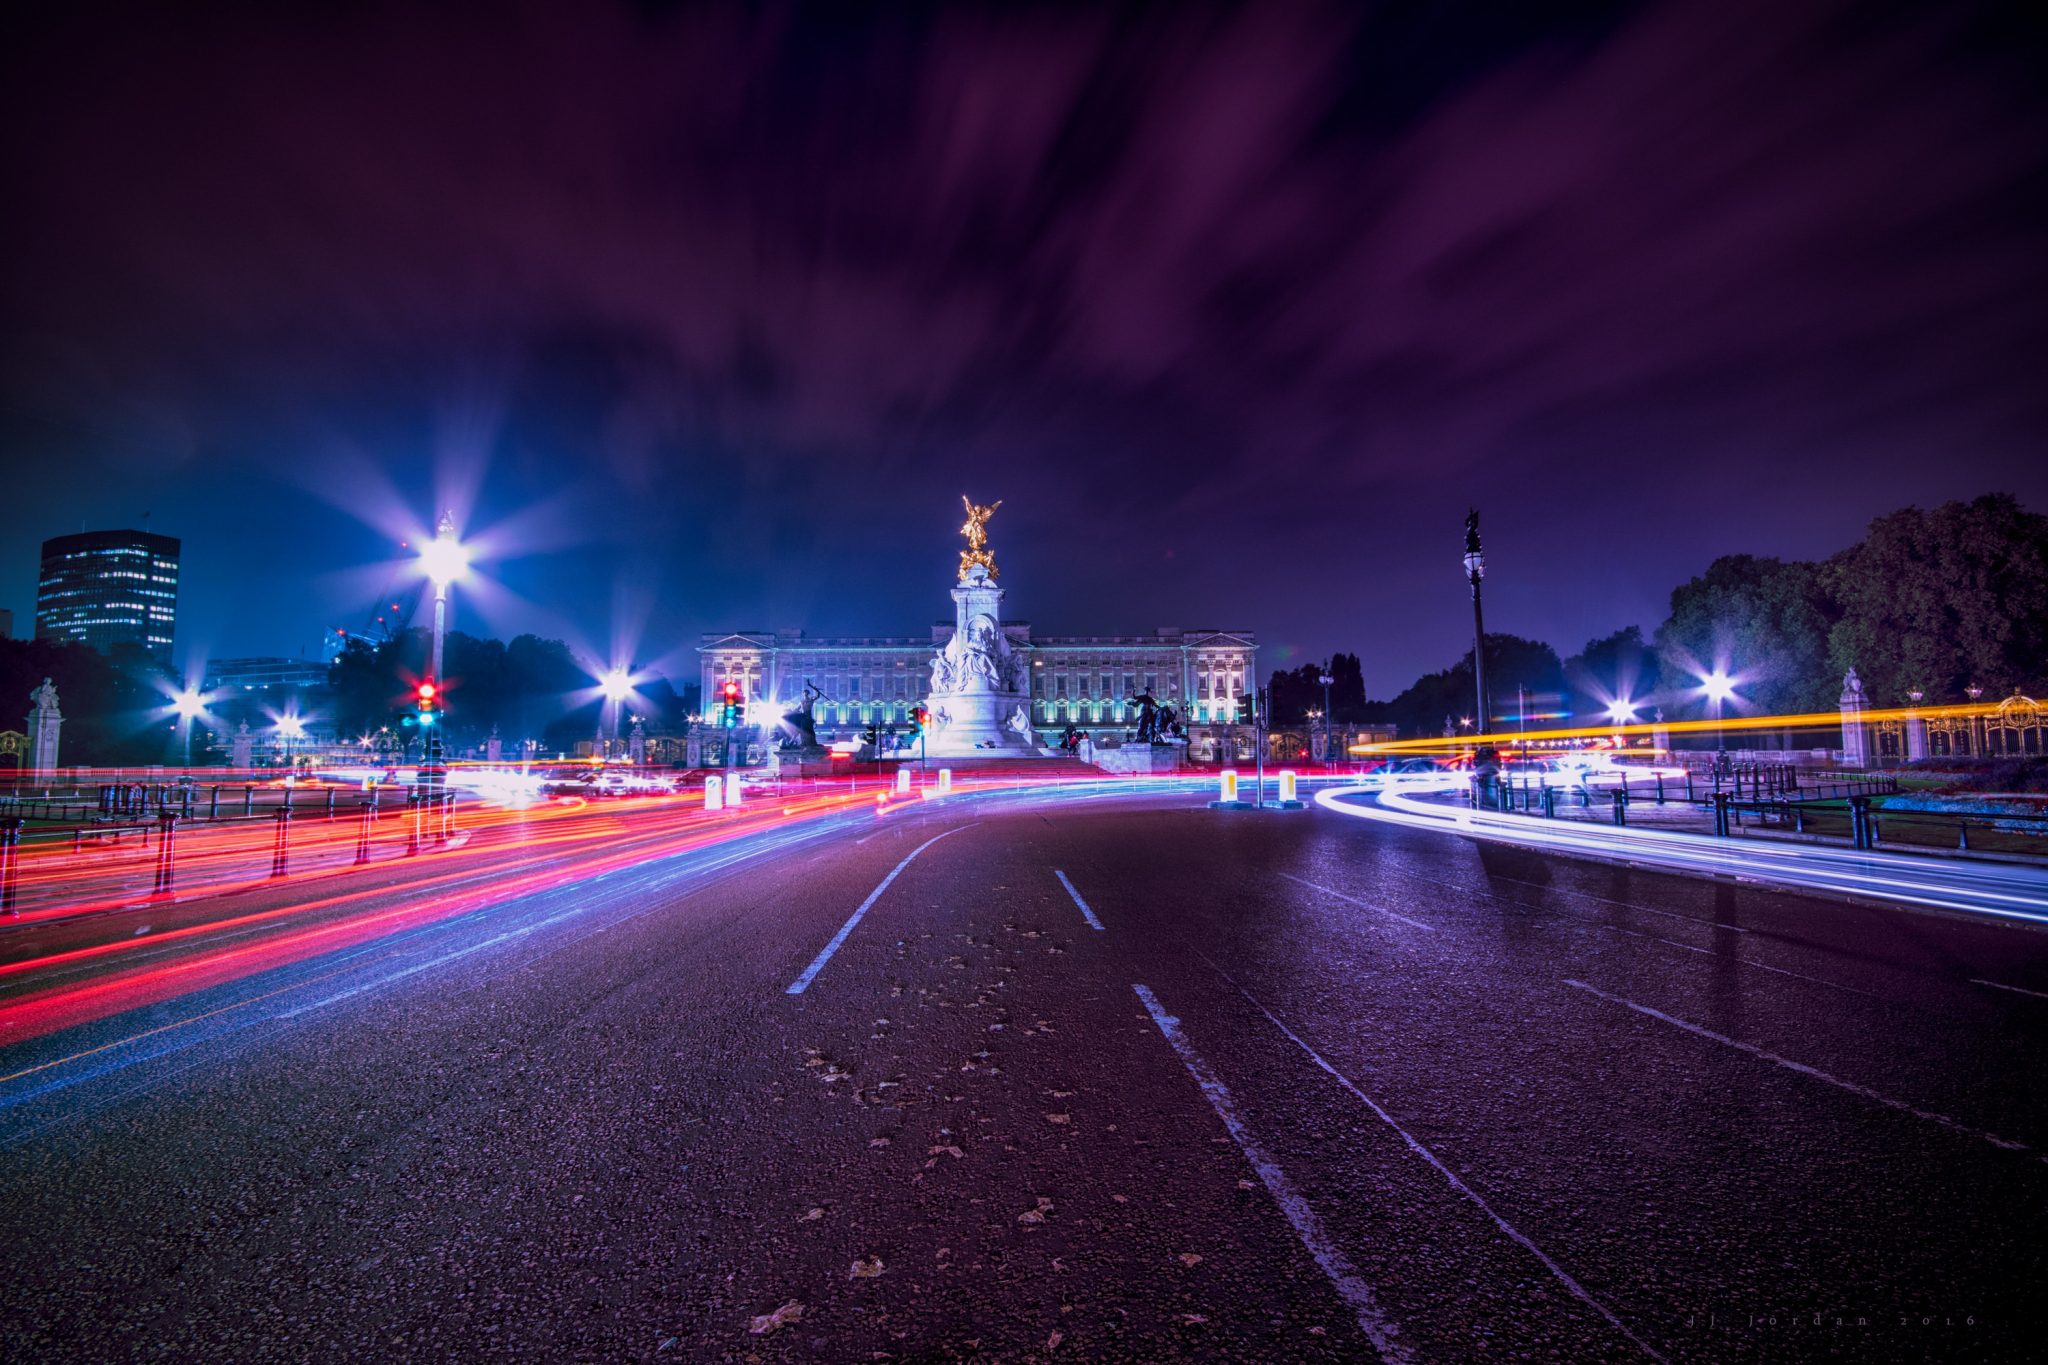 Buckingham Palace by night